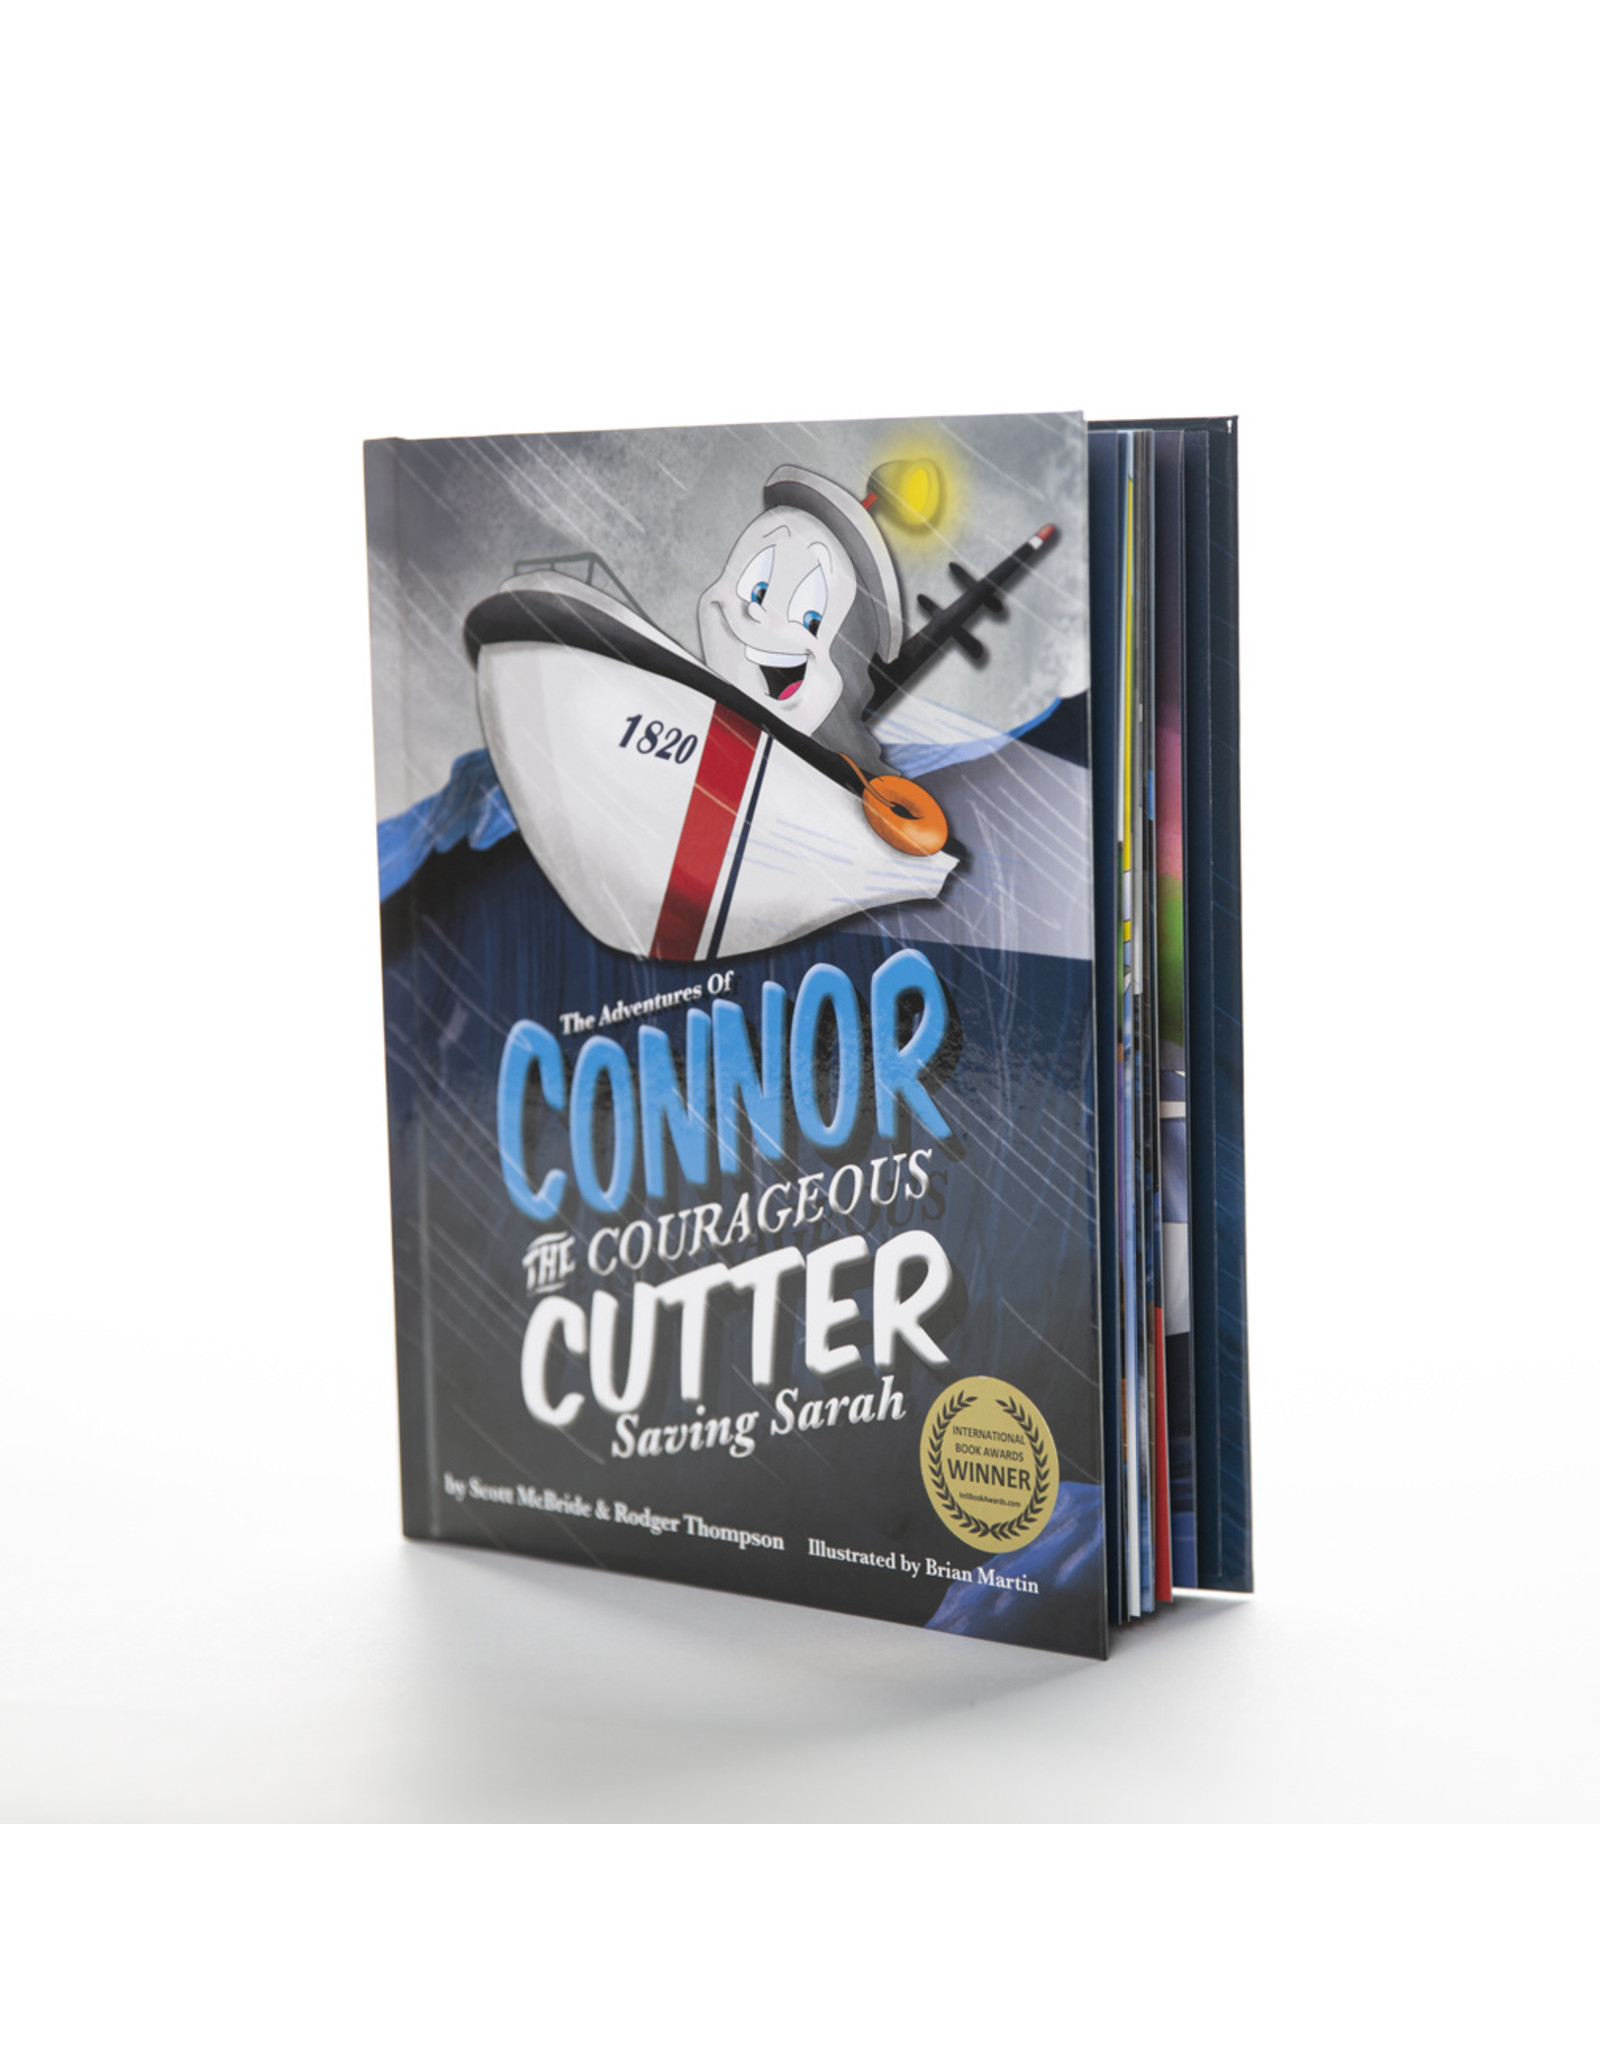 Connor The Courageous Cutter: Saving Sarah, McBride & Thompson